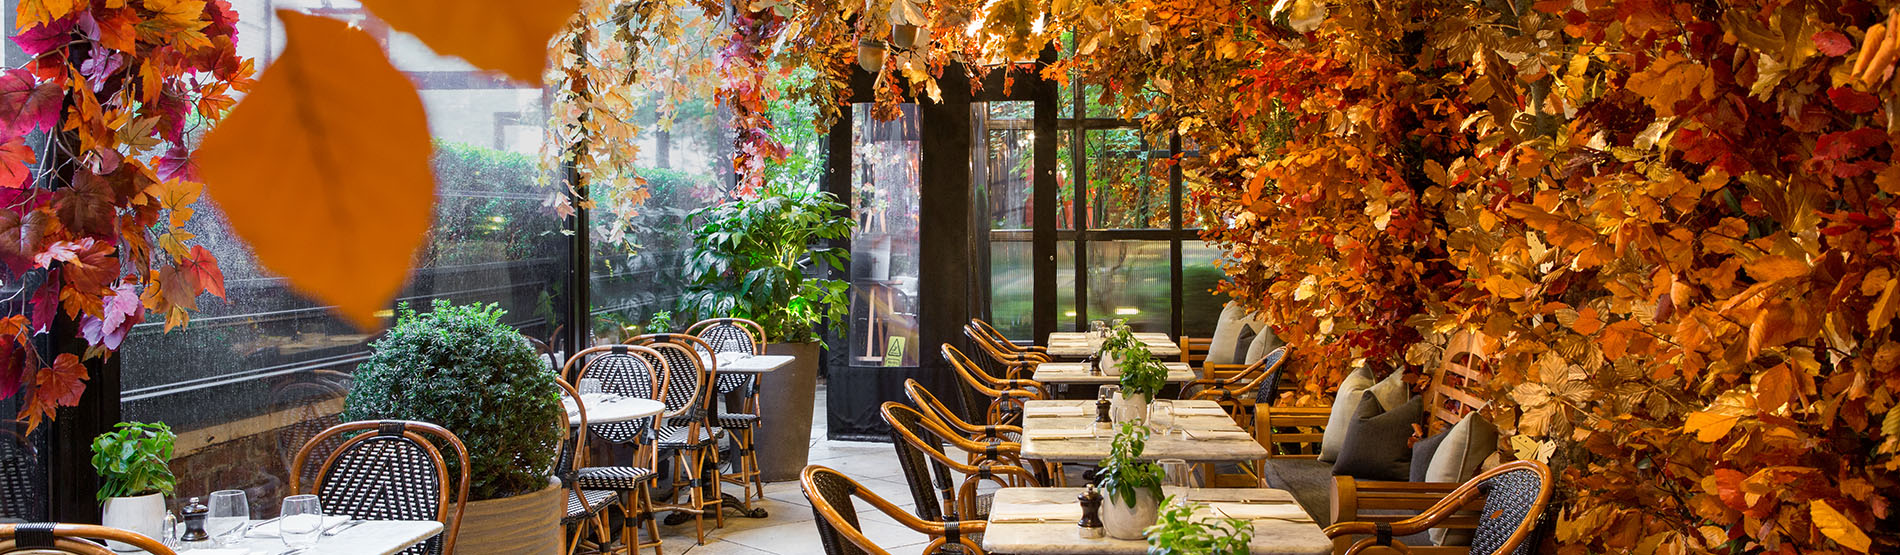 Dalloway Terrace Restaurant in Soho | The Bloomsbury Hotel